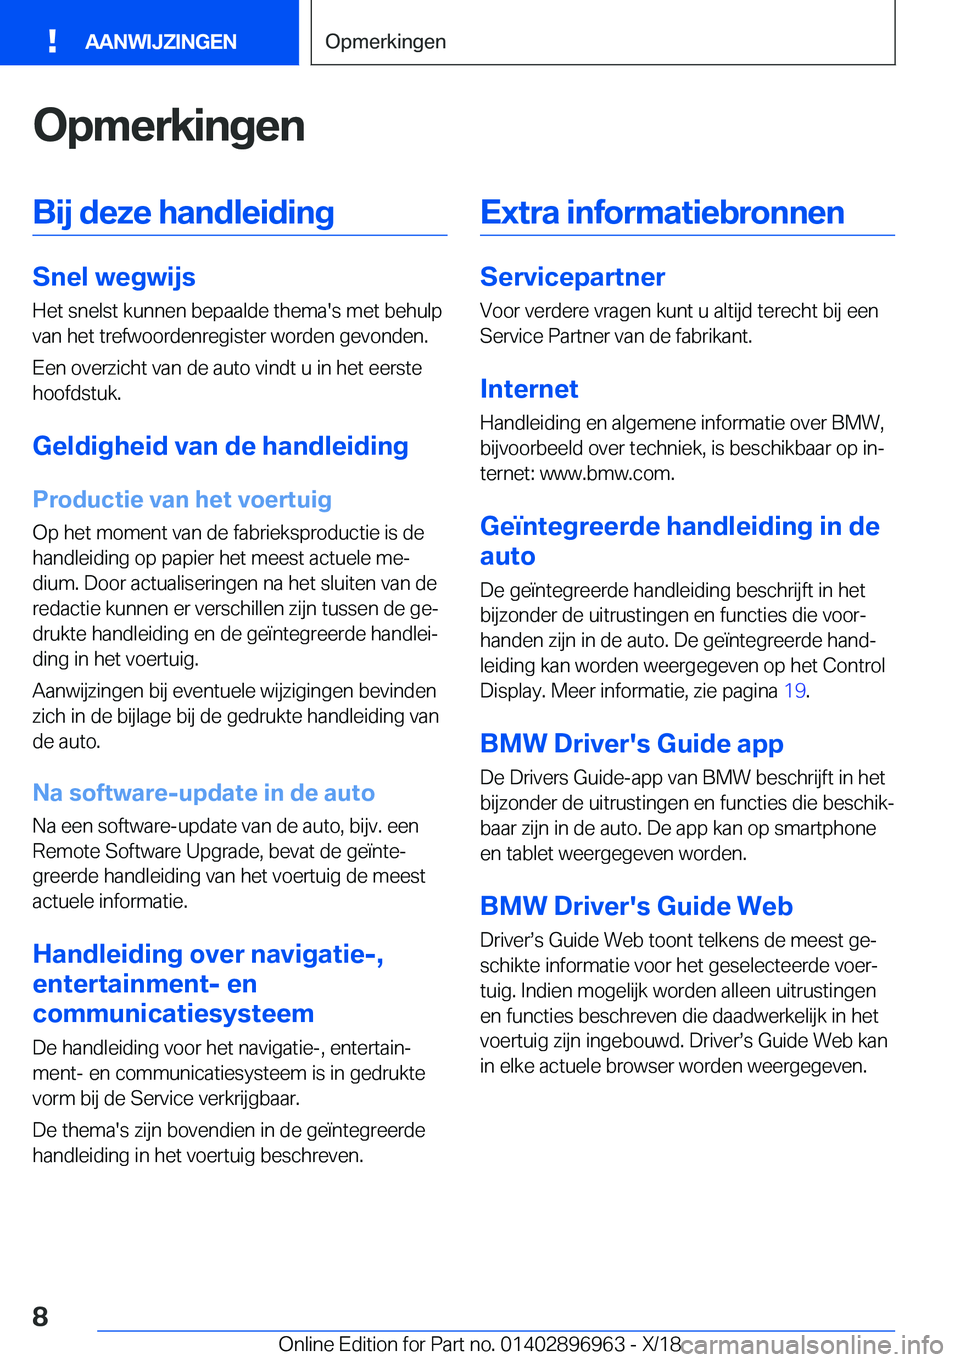 BMW 3 SERIES 2019  Instructieboekjes (in Dutch) �O�p�m�e�r�k�i�n�g�e�n�B�i�j��d�e�z�e��h�a�n�d�l�e�i�d�i�n�g
�S�n�e�l��w�e�g�w�i�j�s
�H�e�t��s�n�e�l�s�t��k�u�n�n�e�n��b�e�p�a�a�l�d�e��t�h�e�m�a�'�s��m�e�t��b�e�h�u�l�p
�v�a�n��h�e�t��